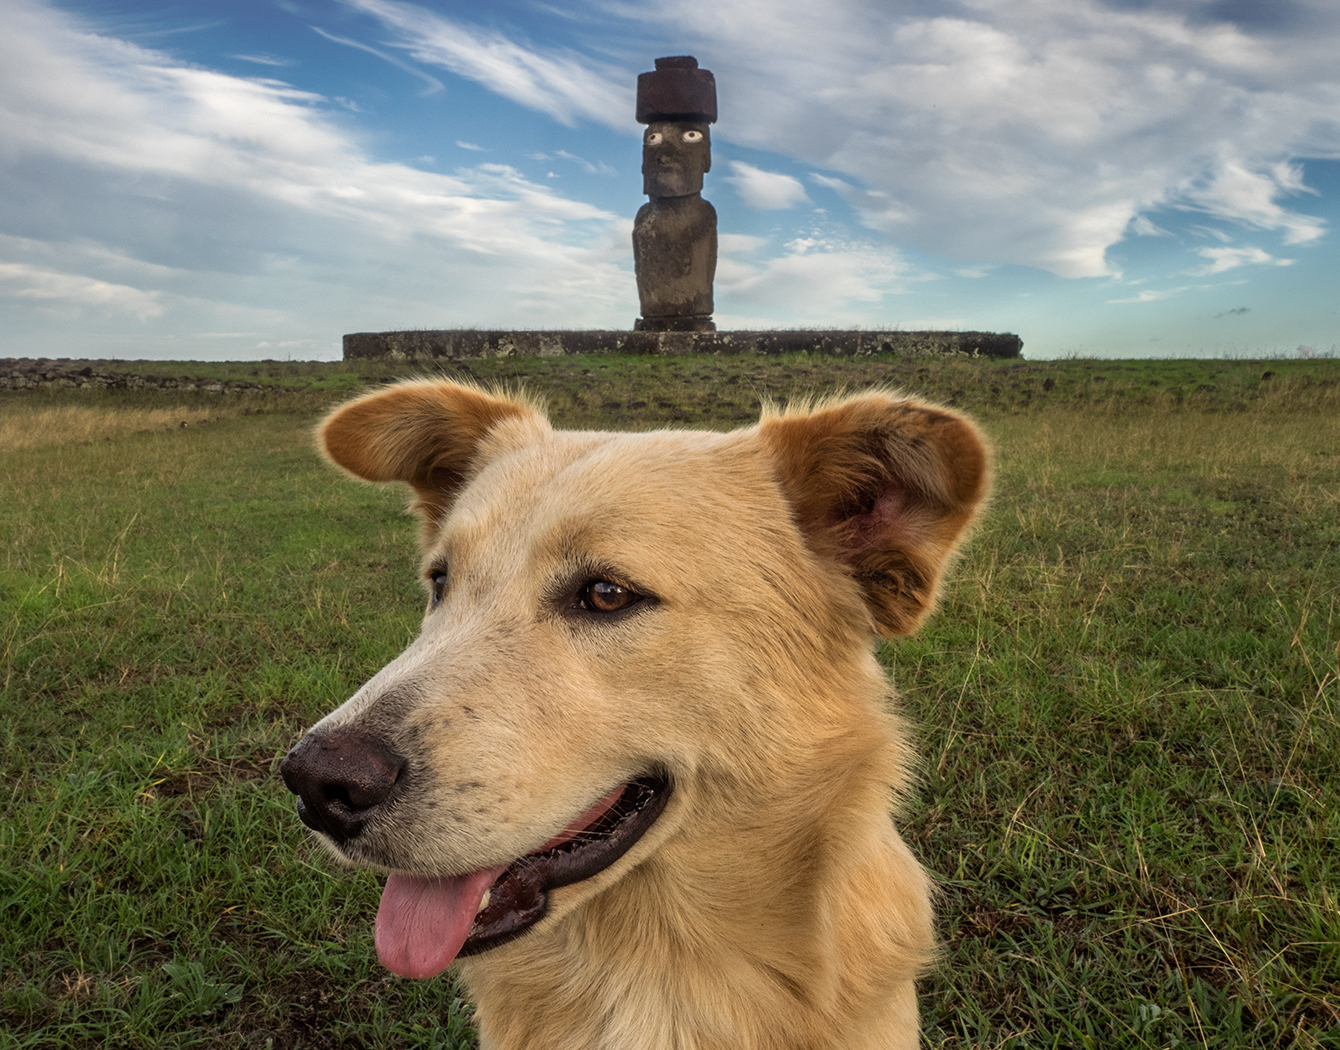 Moai heads of Tahai near Hanga Roa and one of the canine residents